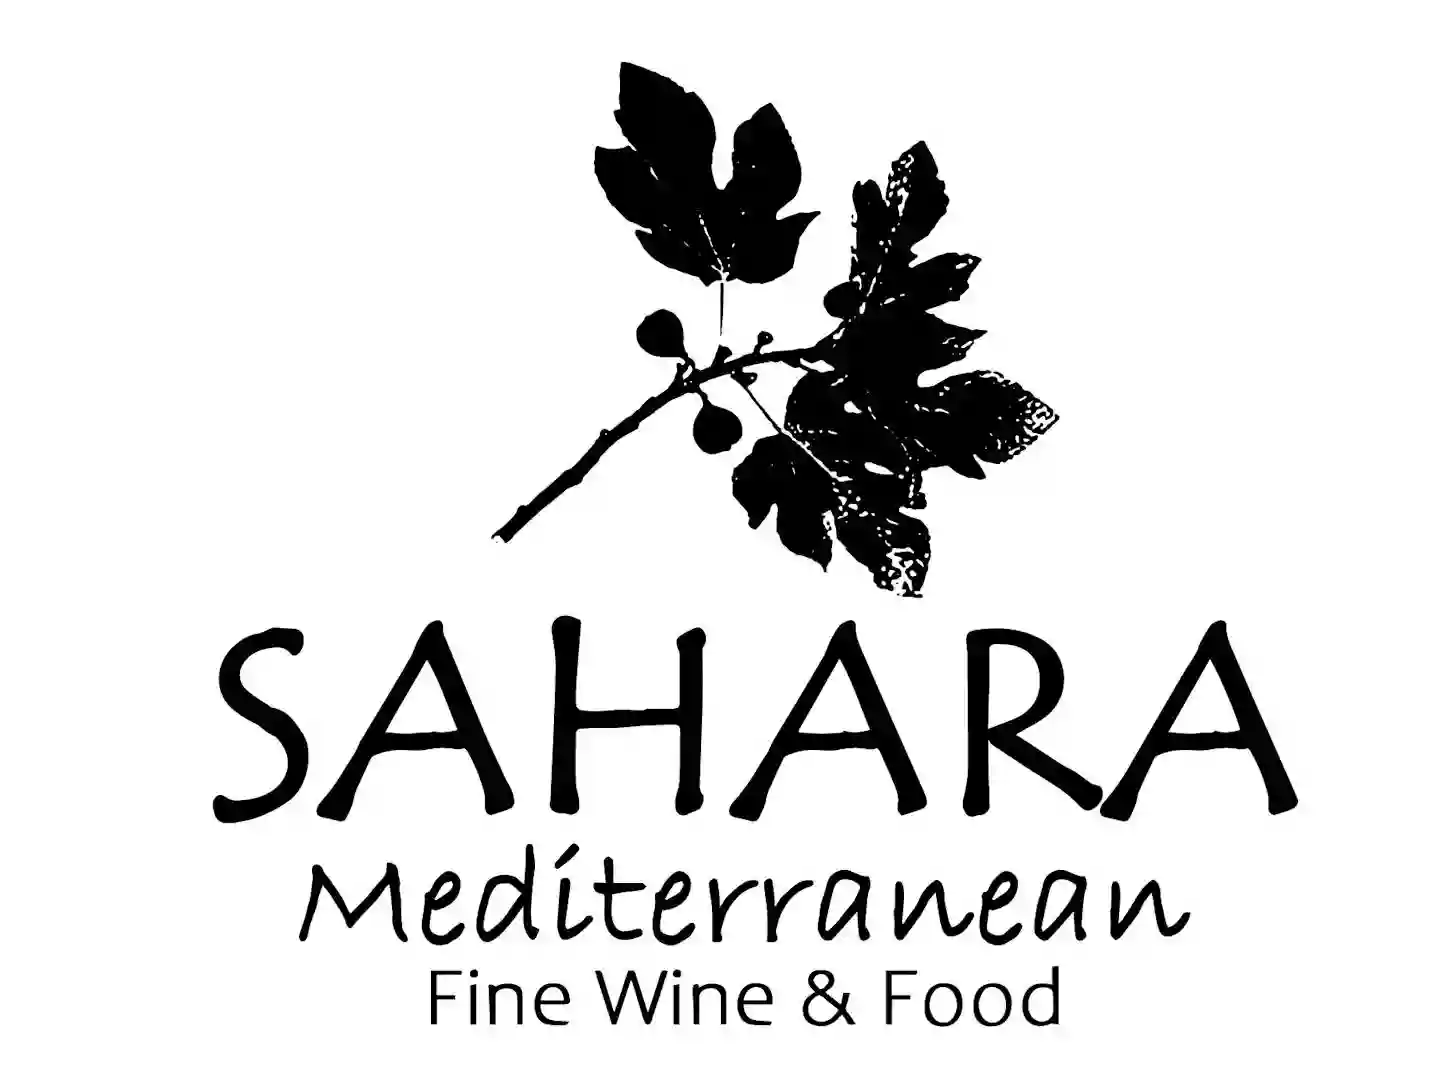 Sahara Mediterranean Fine Wine & Food